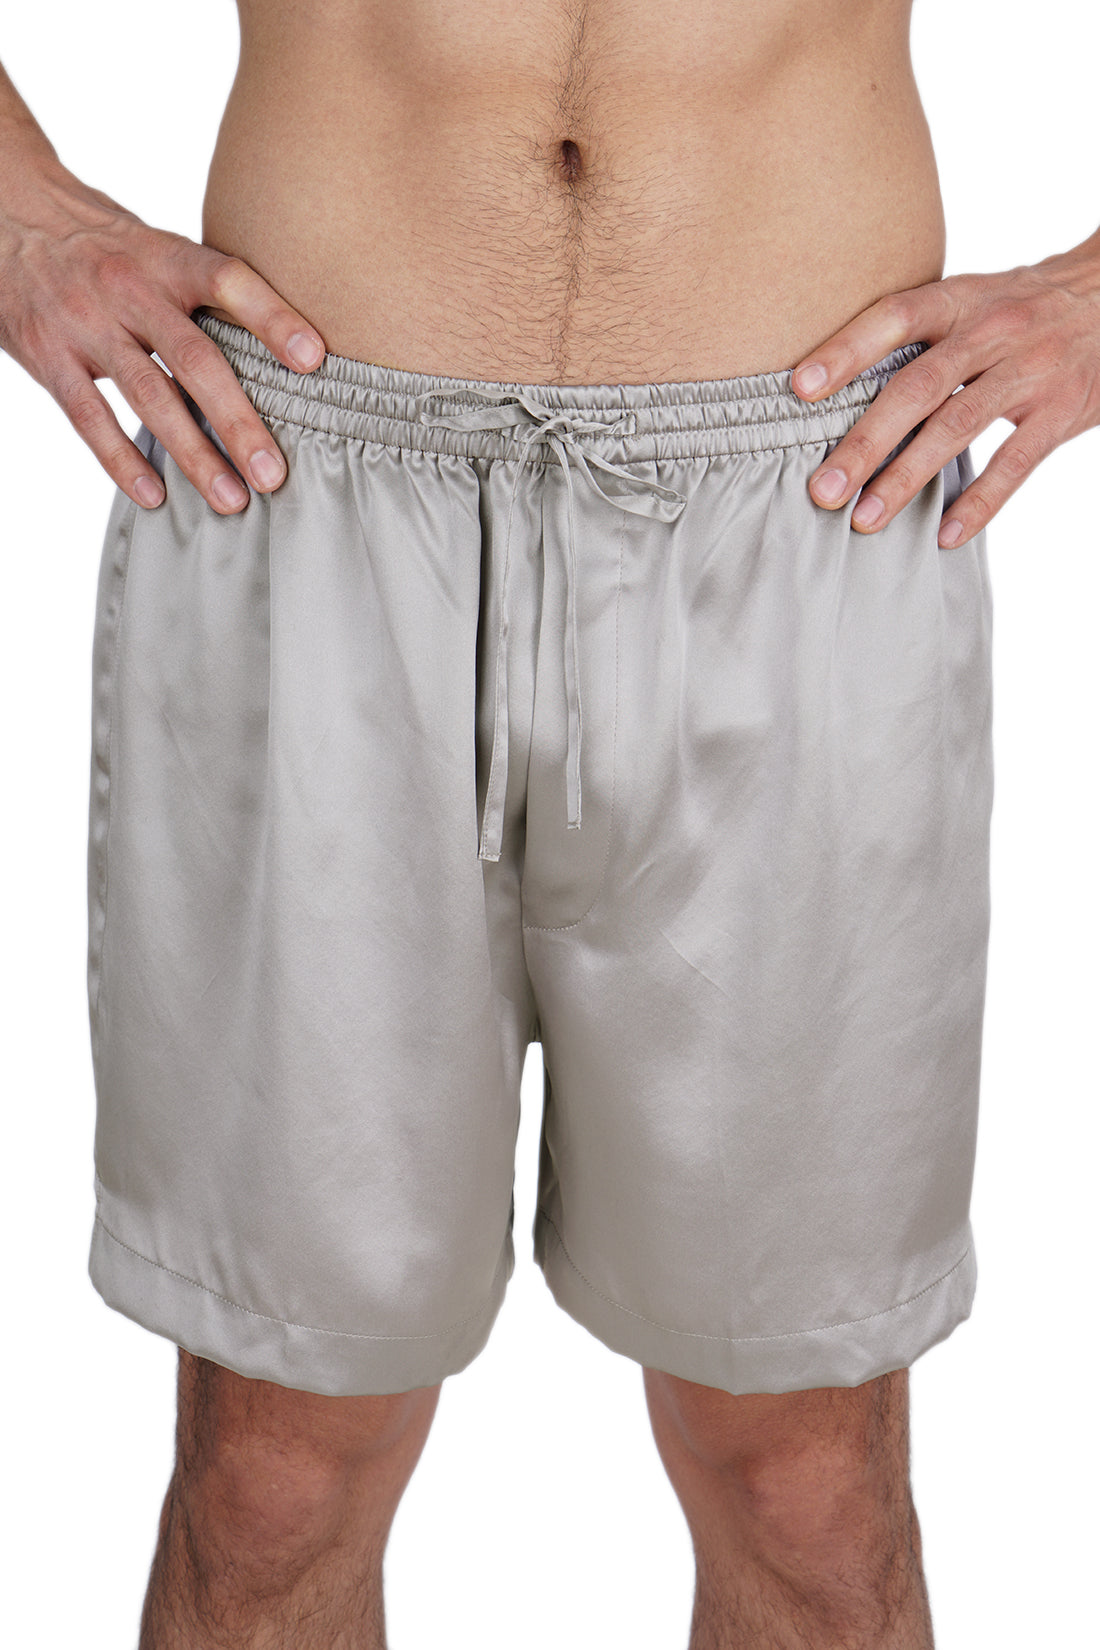 Men's Silk Sleepwear Boxer Shorts - Dove Grey - The Silk Lady